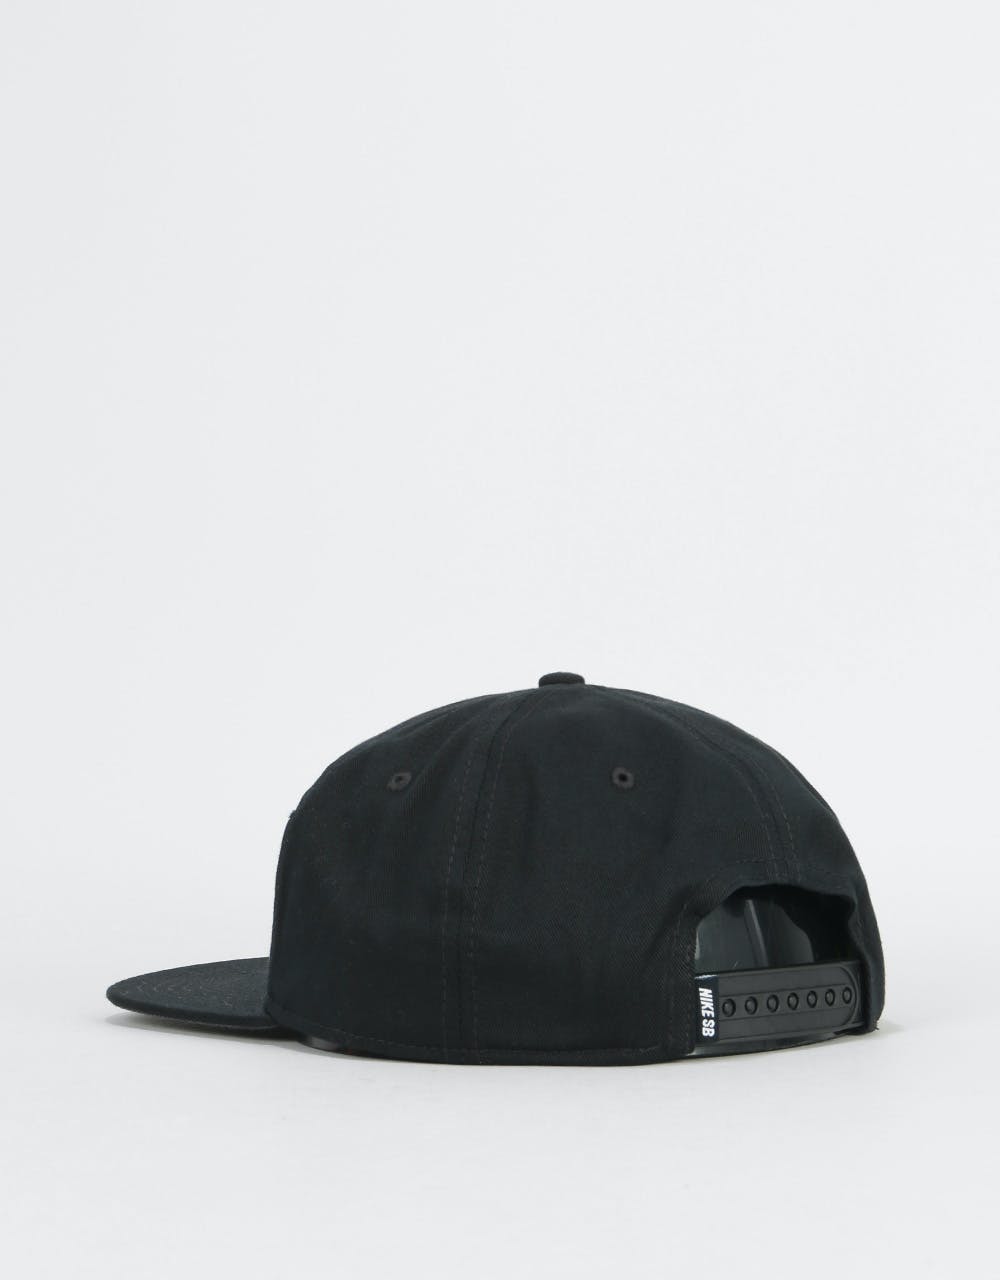 Nike SB Pro Snapback Cap - Black/Anthracite/Black